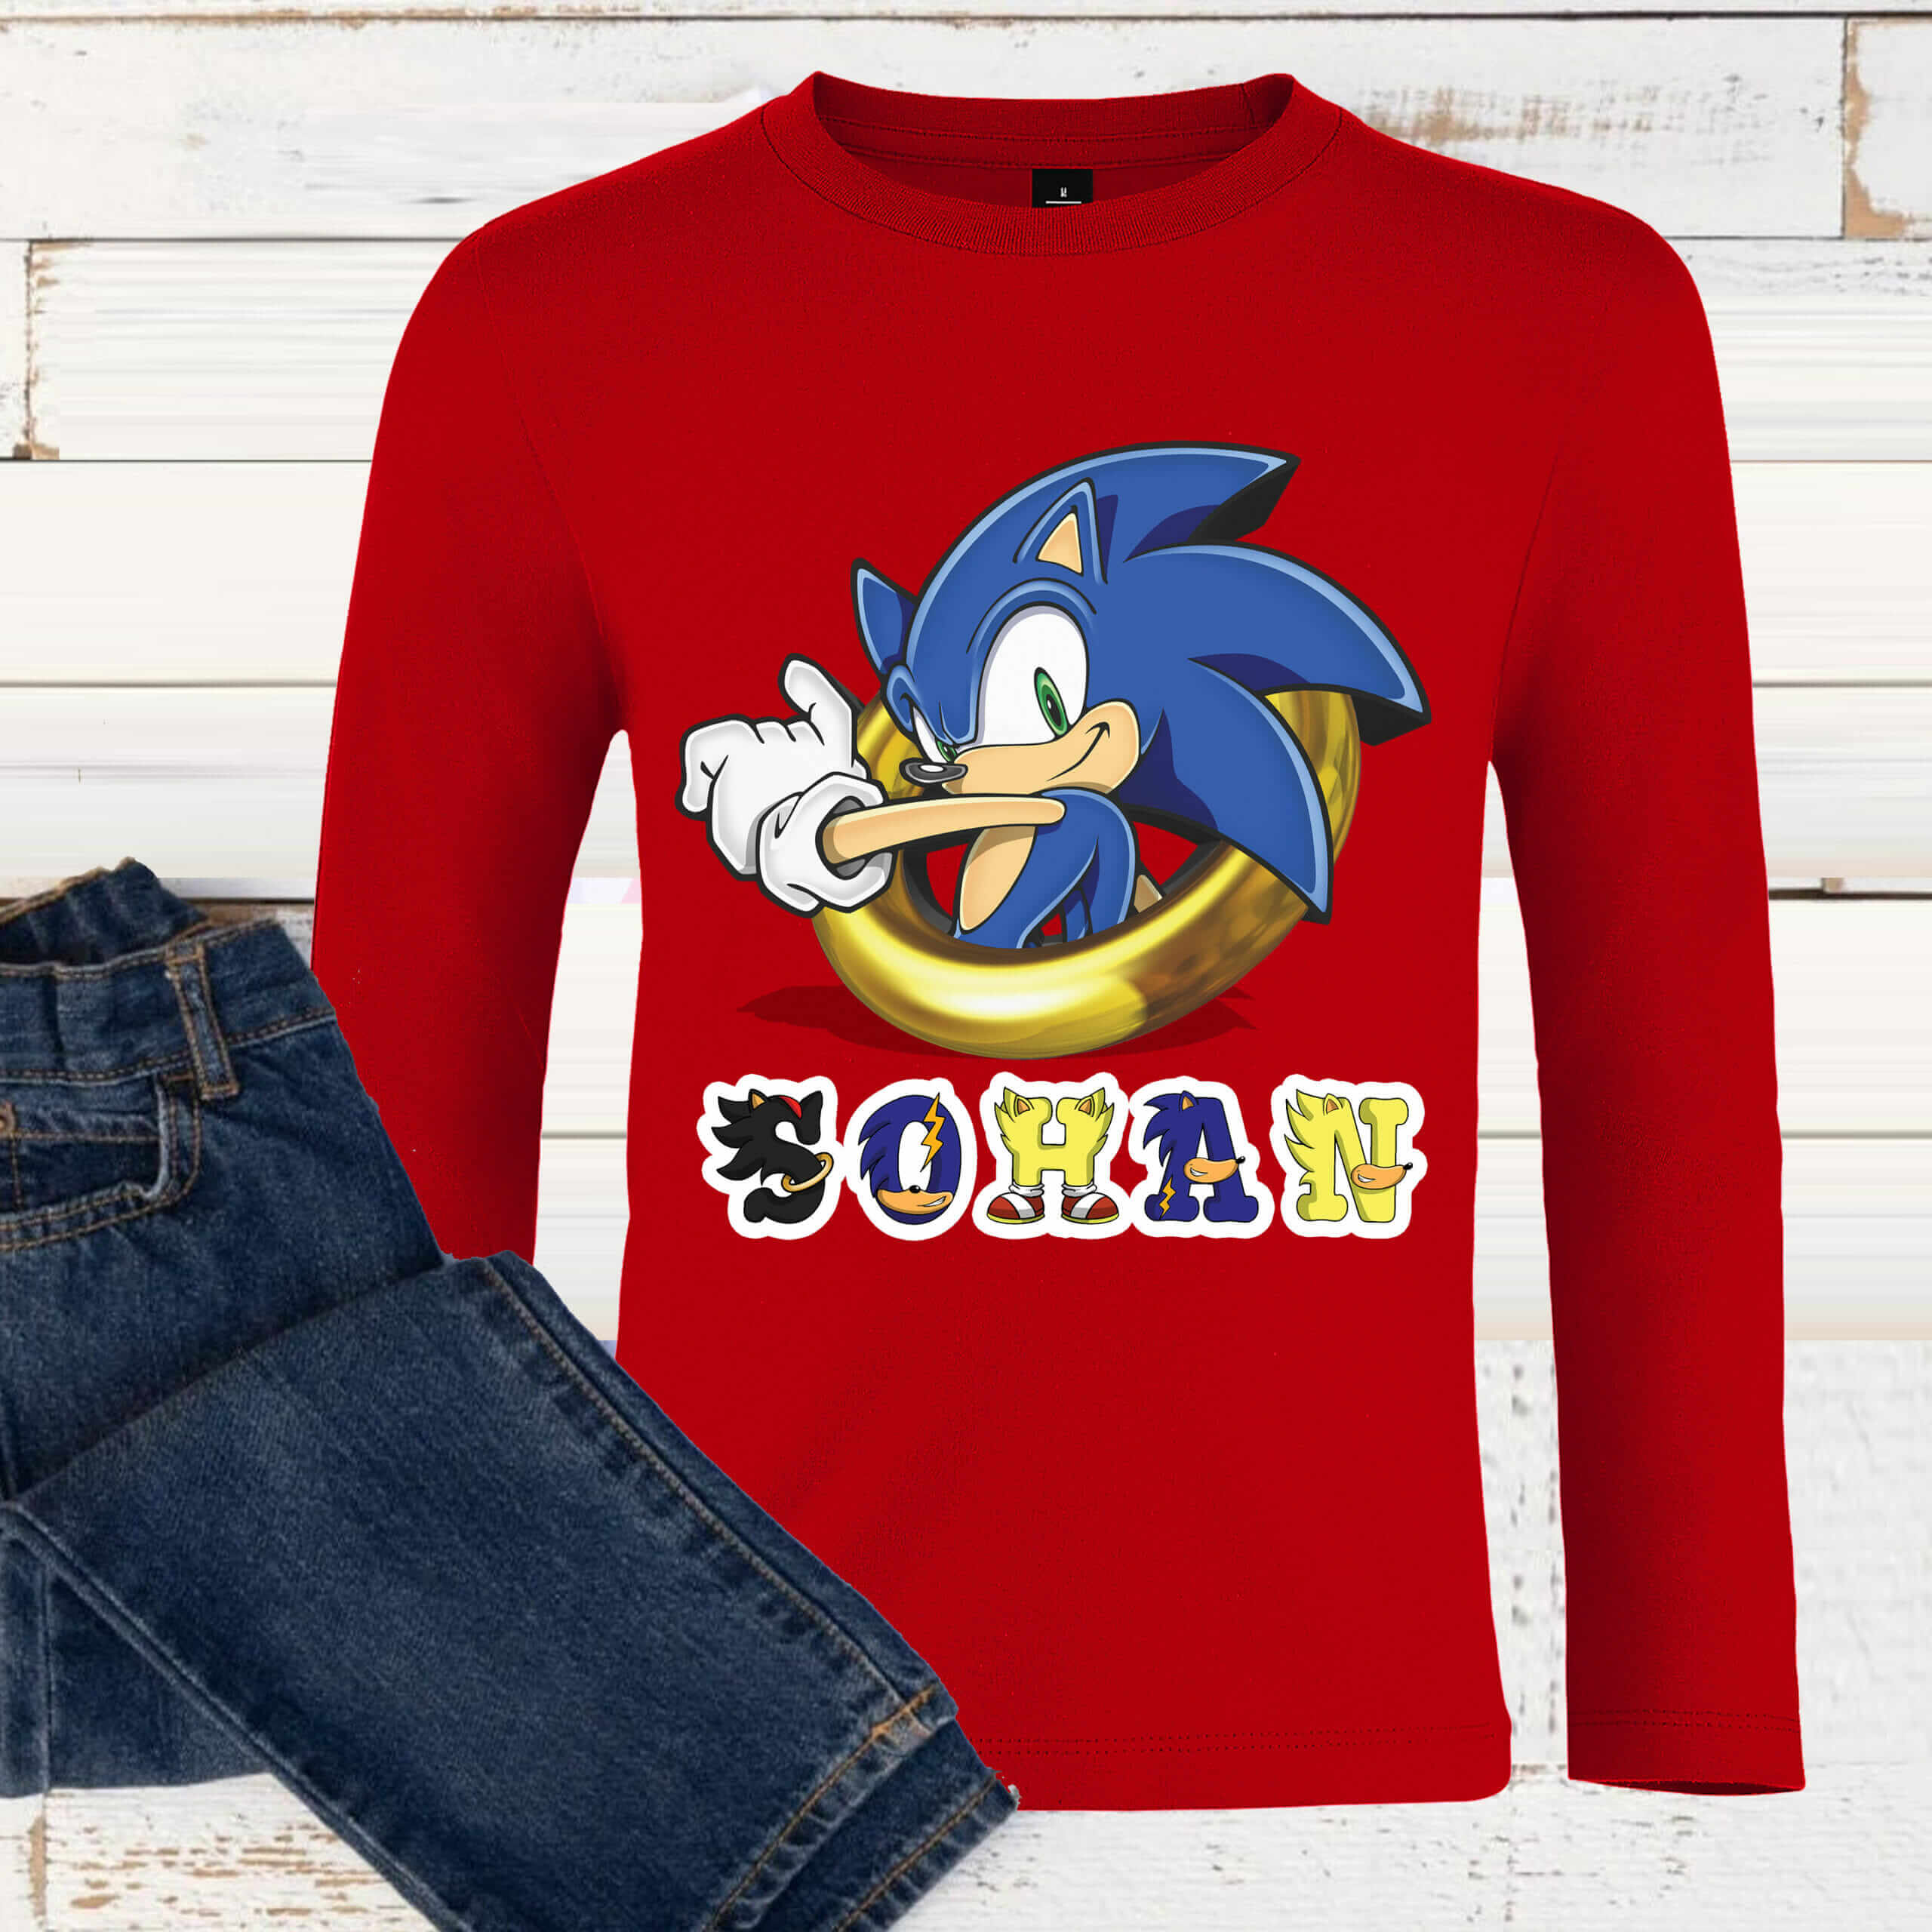 T-shirt Sonic